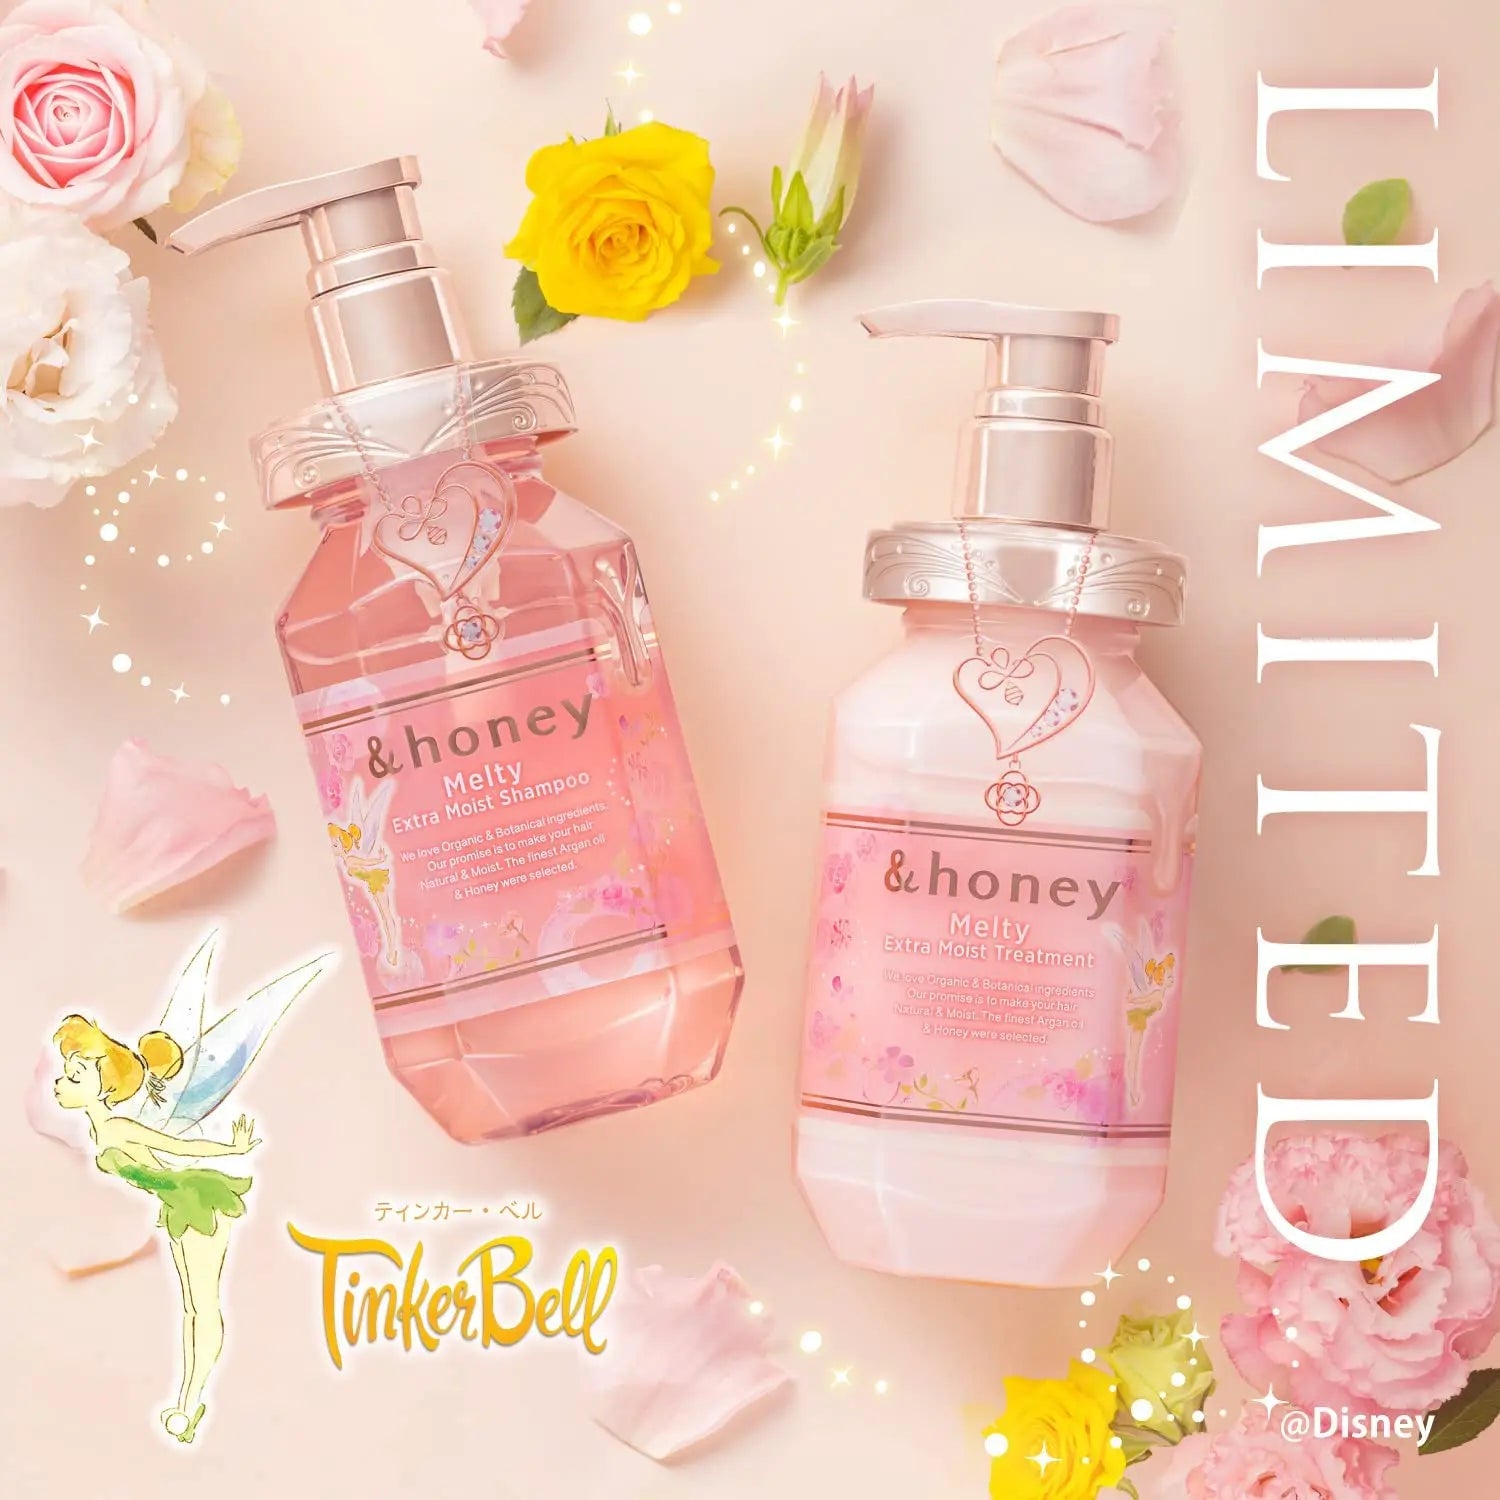 & Honey Melty Extra Moist Shampoo & Treatment Tinker Bell Limited Edition Set 440ml Each - Buy Me Japan